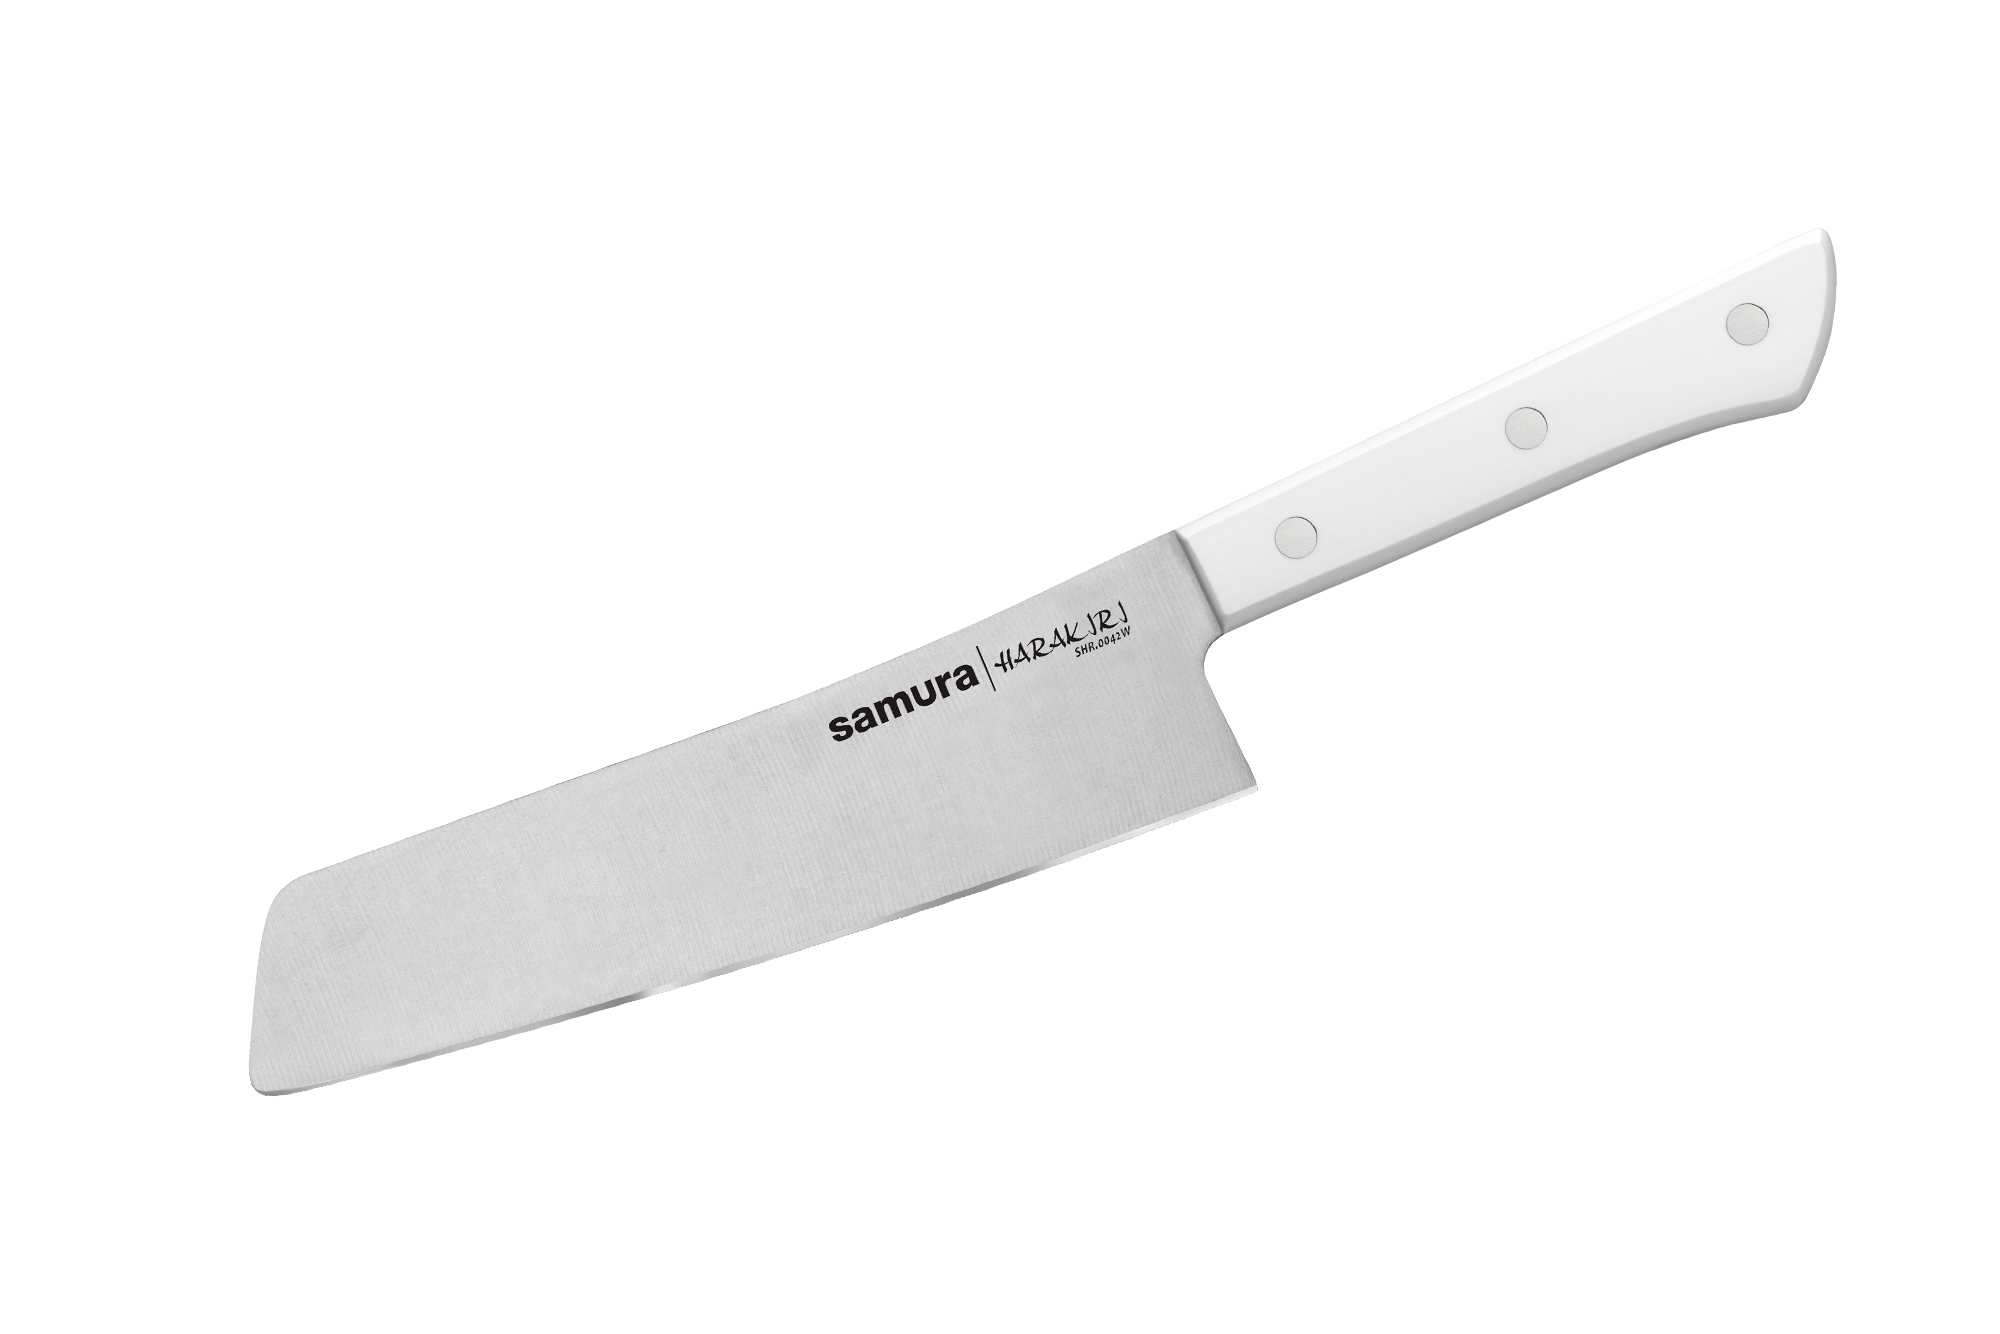 Кухонный нож накири Samura Harakiri 174 мм, сталь AUS-8, рукоять пластик, белый нож кухонный samura harakiri гранд шеф 240 мм коррозие стойкая сталь abs пластик